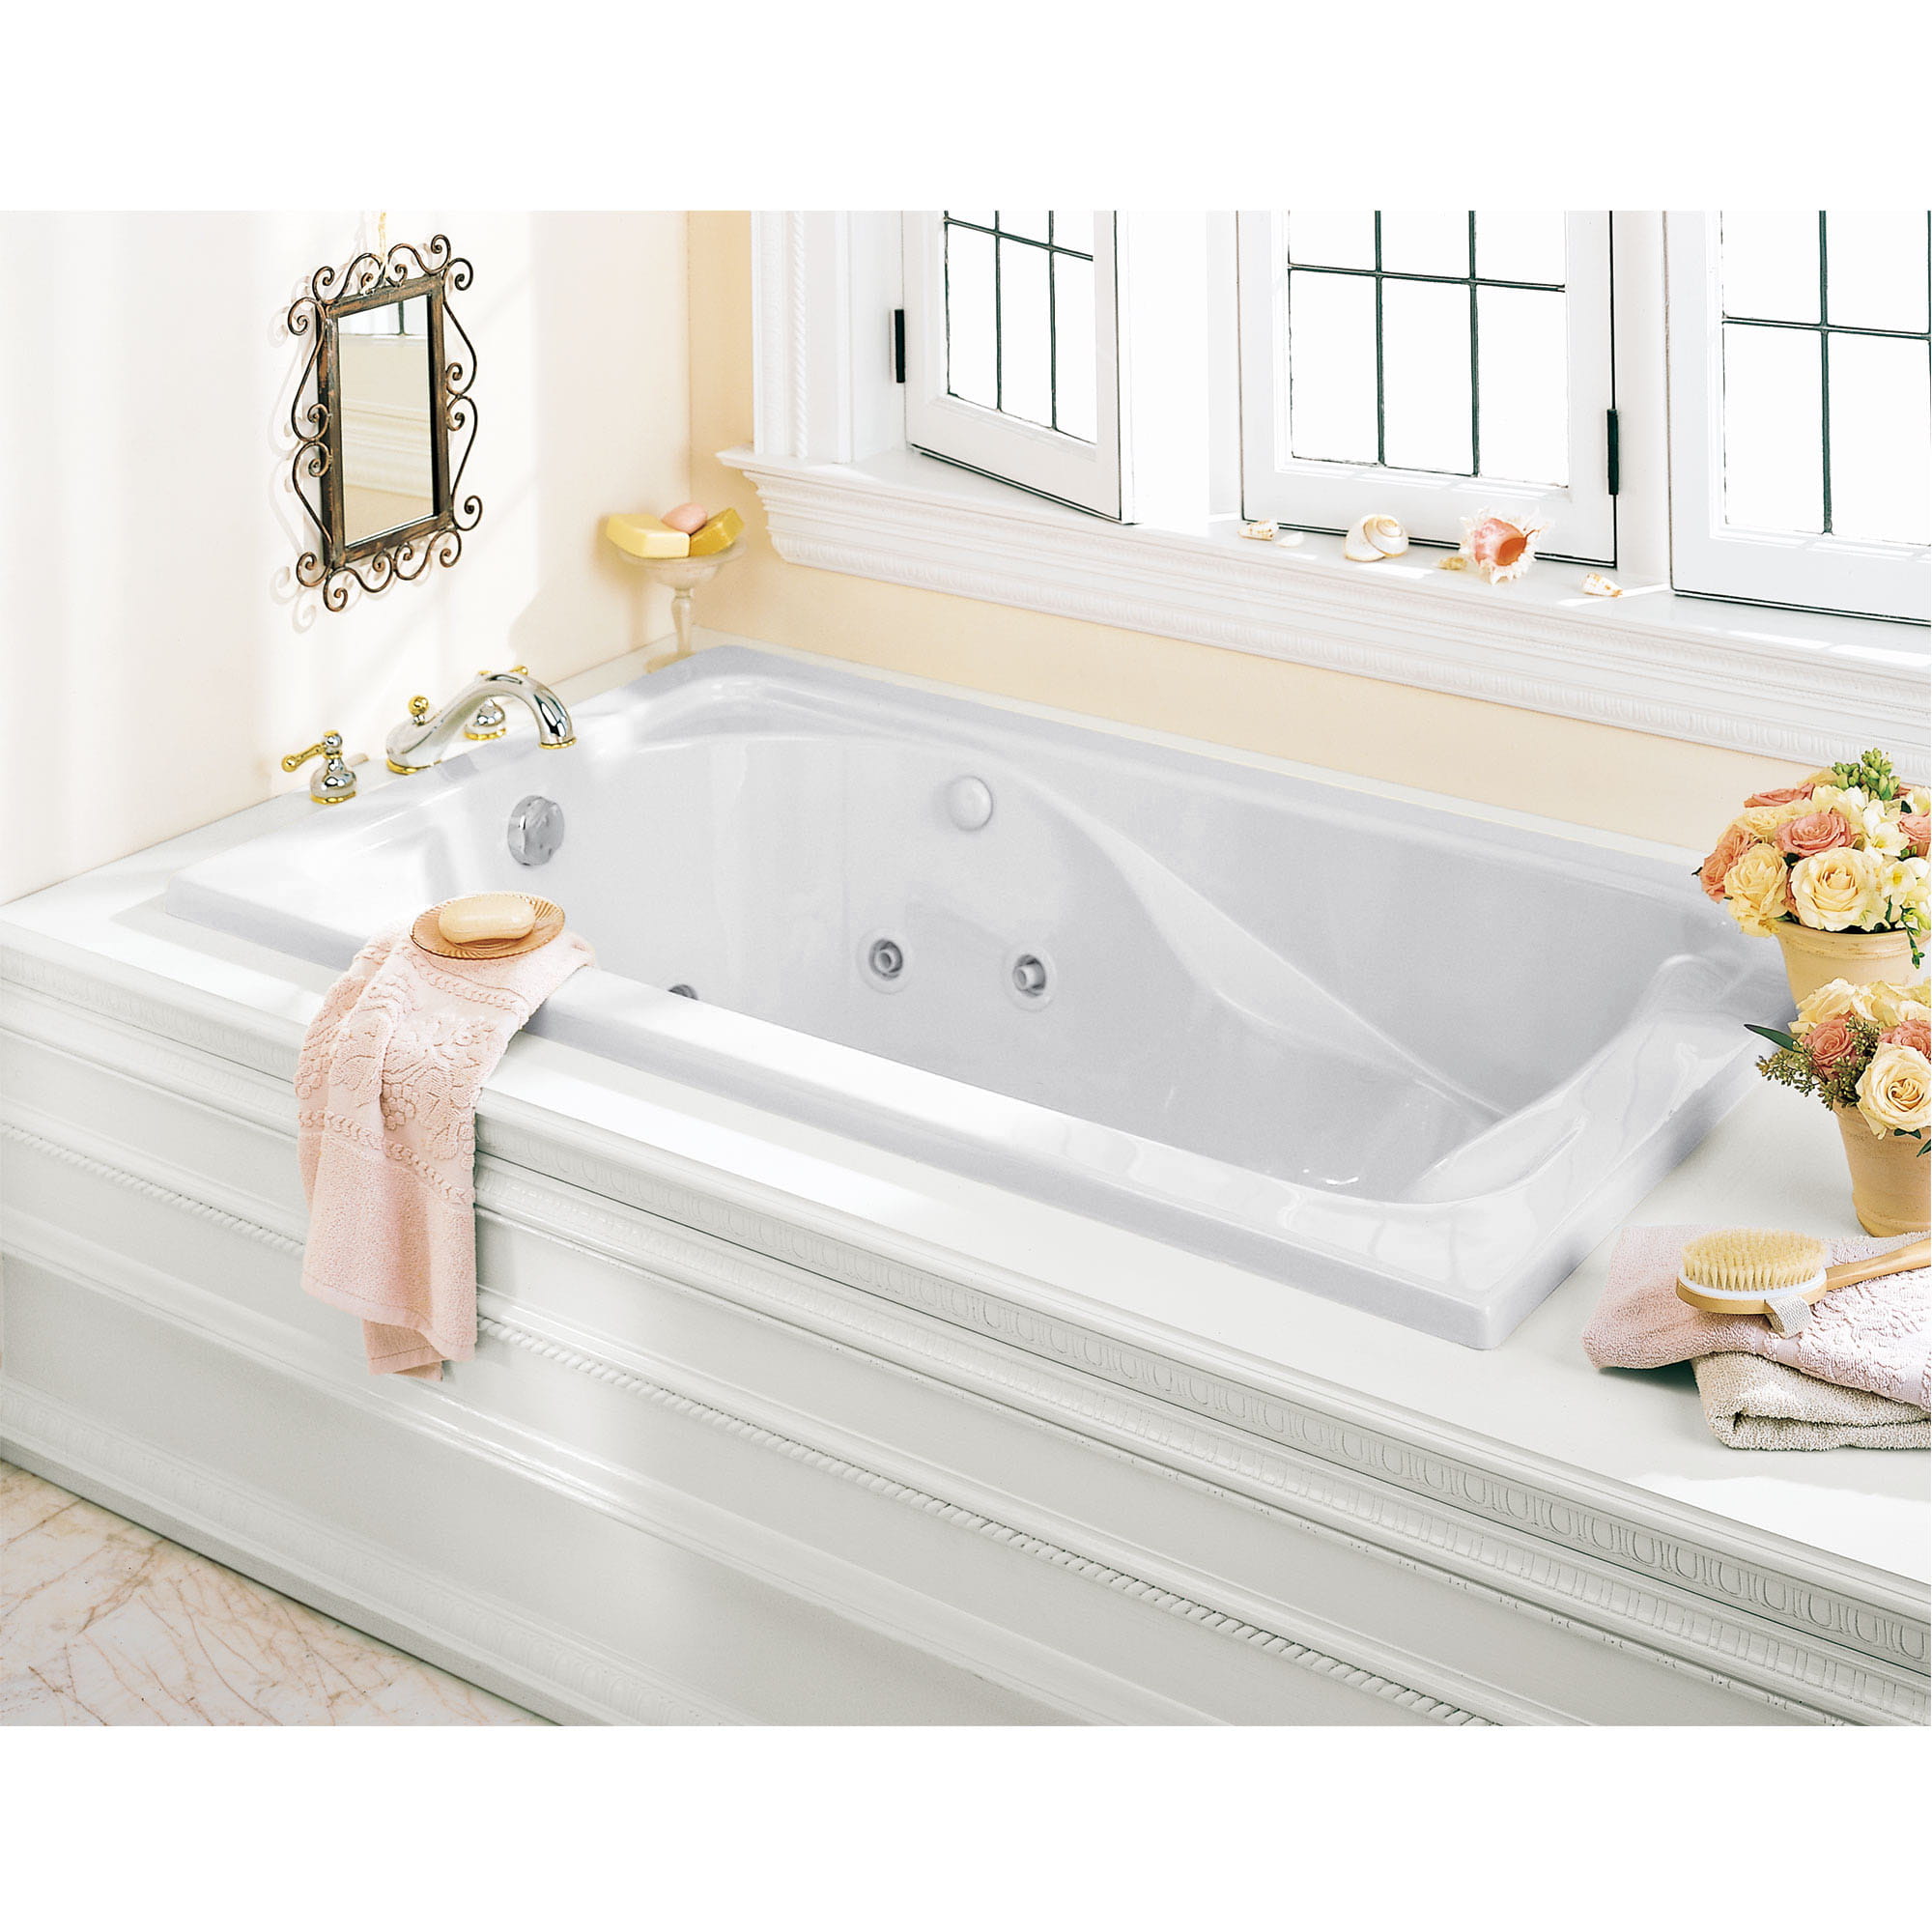 Cadet® 60 x 42-Inch Drop-In Bathtub With Hydromassage System